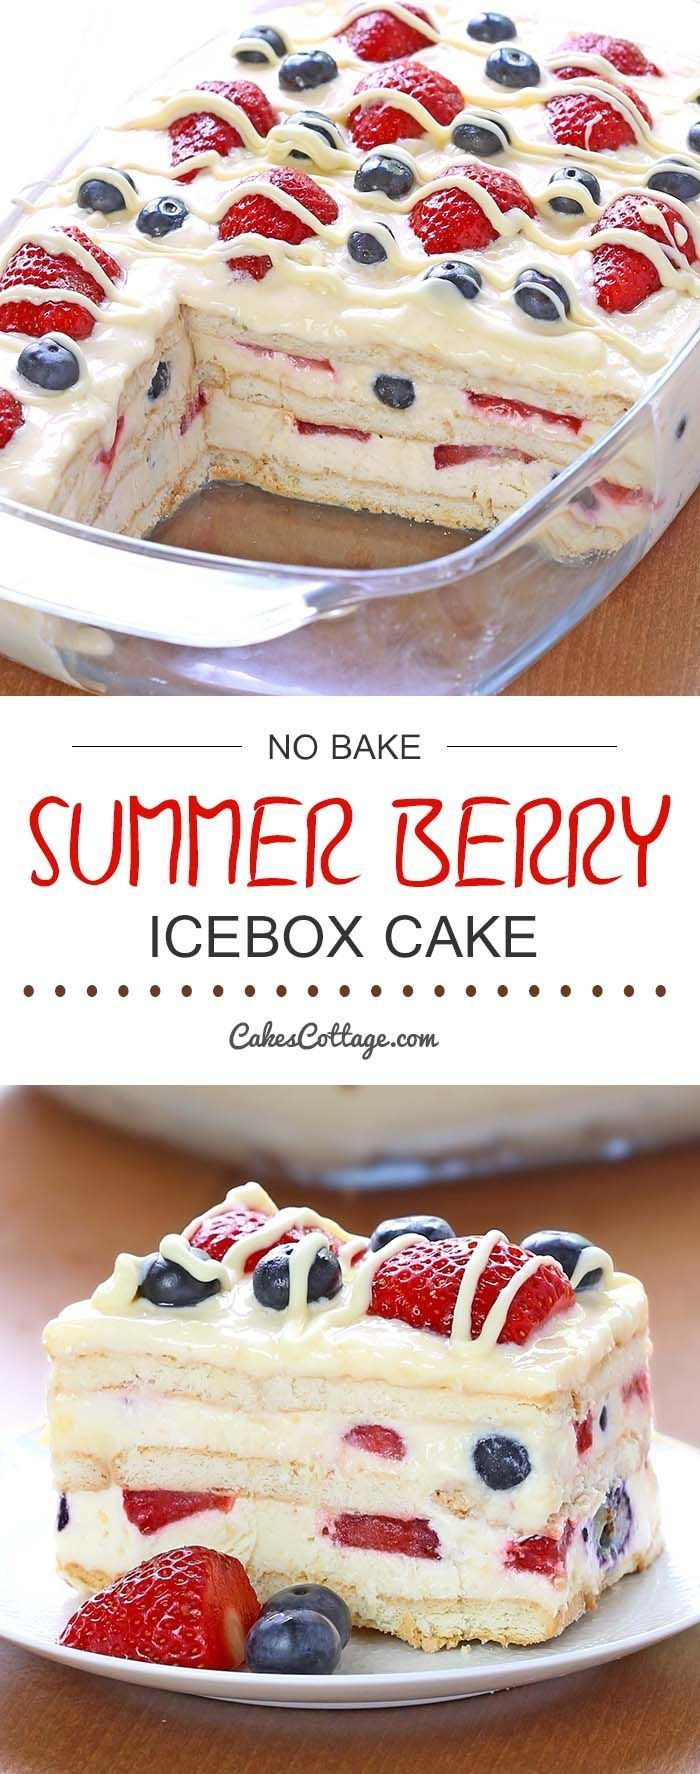 Great Summer Desserts
 best Holiday Delights images on Pinterest